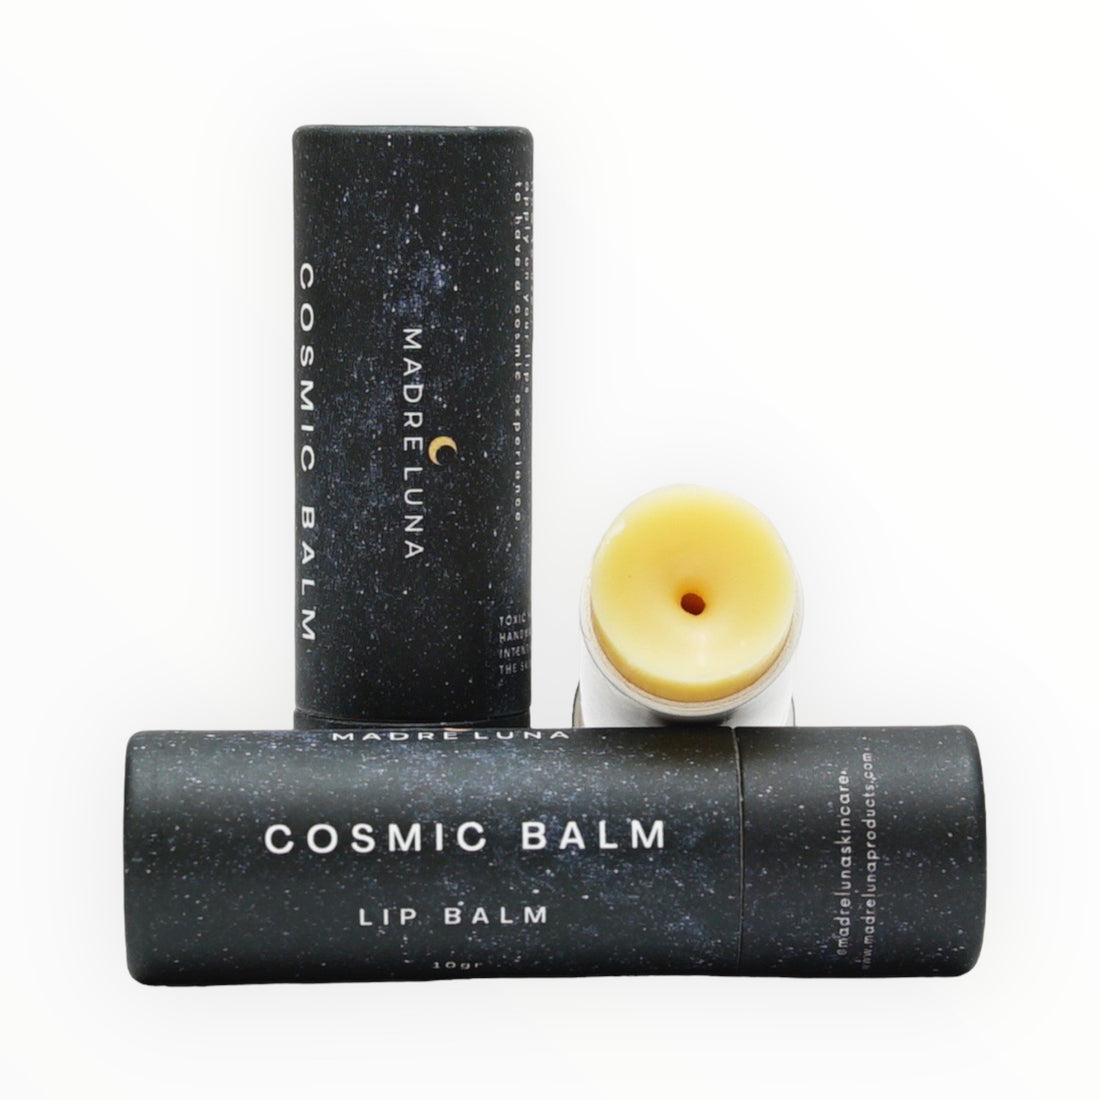 COSMIC BALM - lip balm